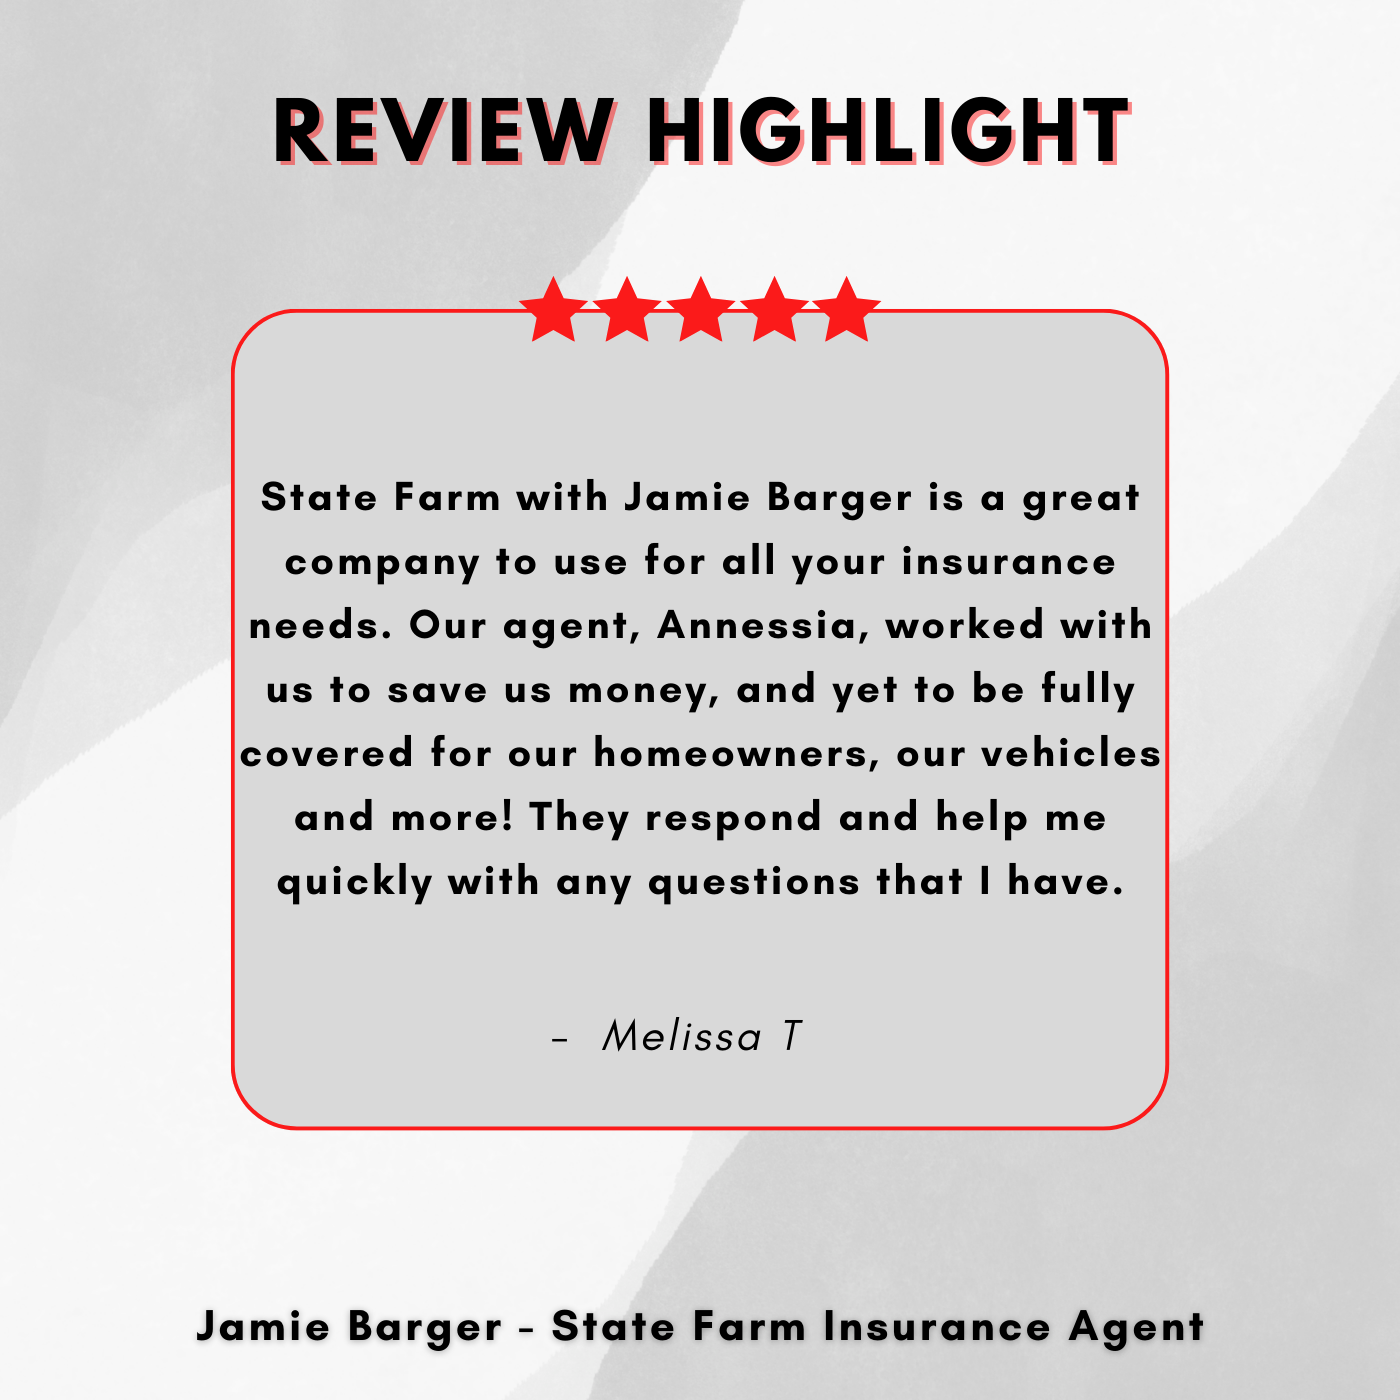 Jamie Barger - State Farm Insurance Agent Jamie Barger - State Farm Insurance Agent Abingdon (276)676-1150